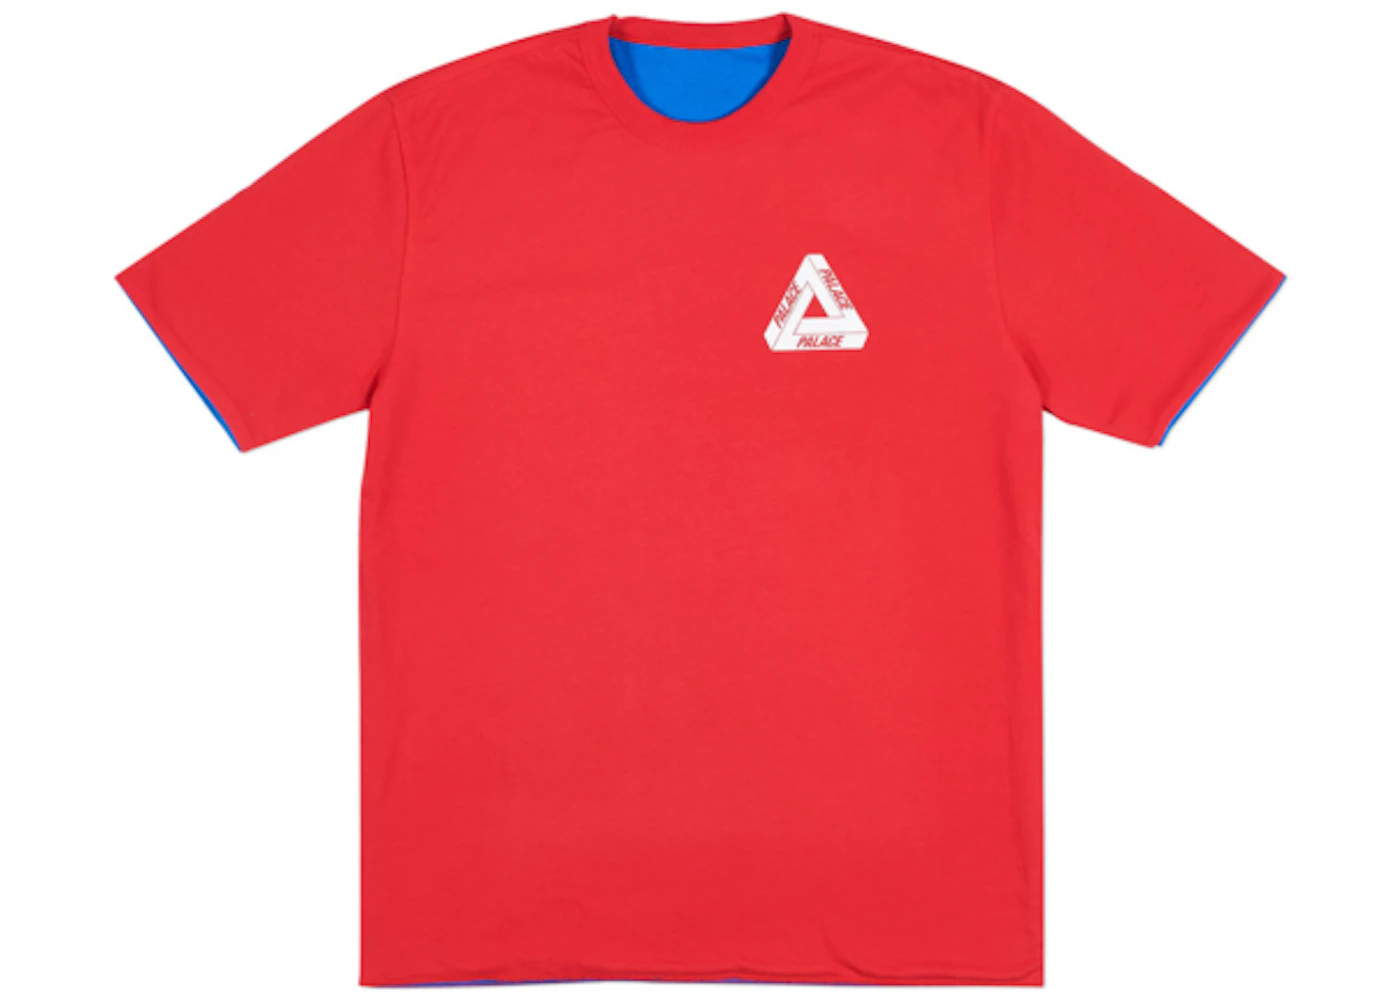 Låne Generalife Fugtighed Palace Reverso T-Shirt Red/Blue - SS18 Men's - US